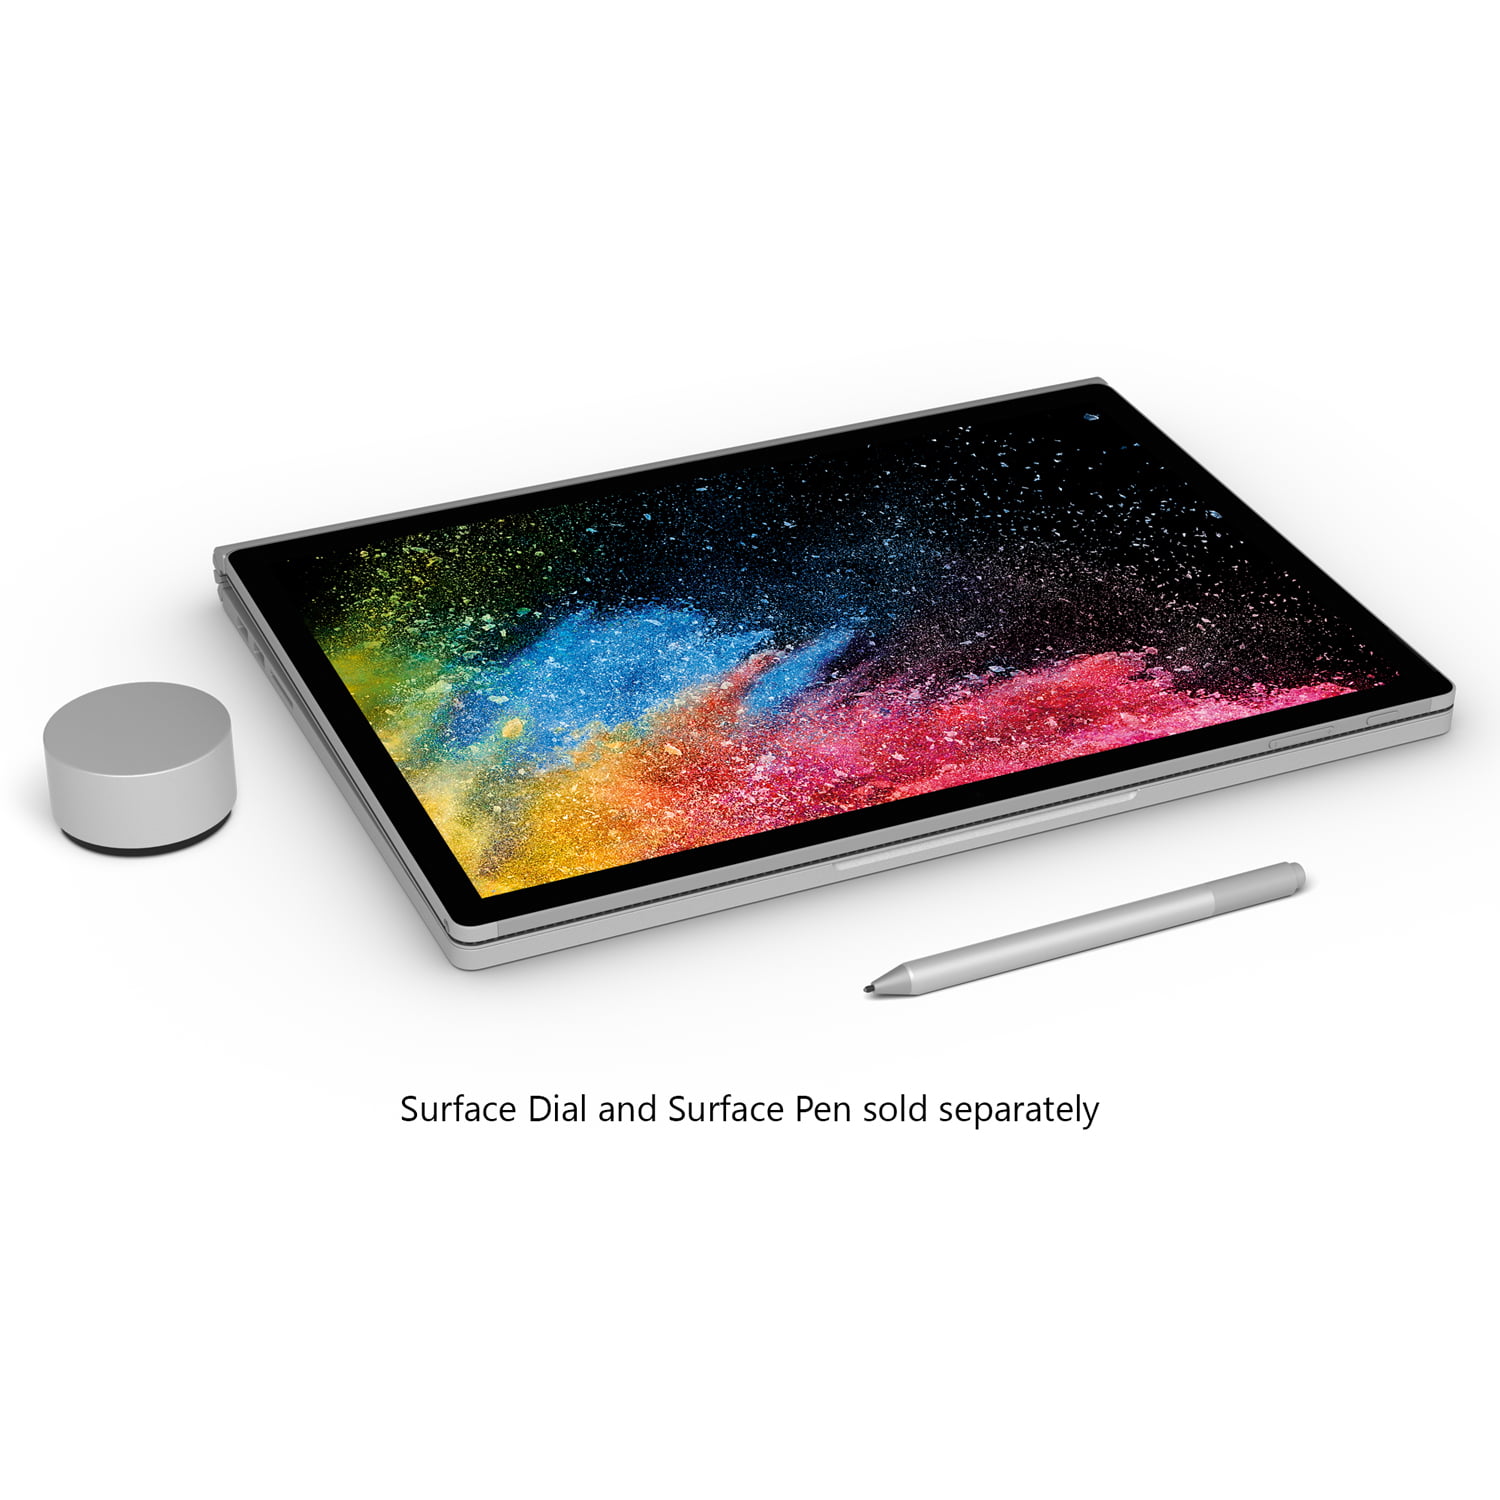 Microsoft Surface Book 2 13.5